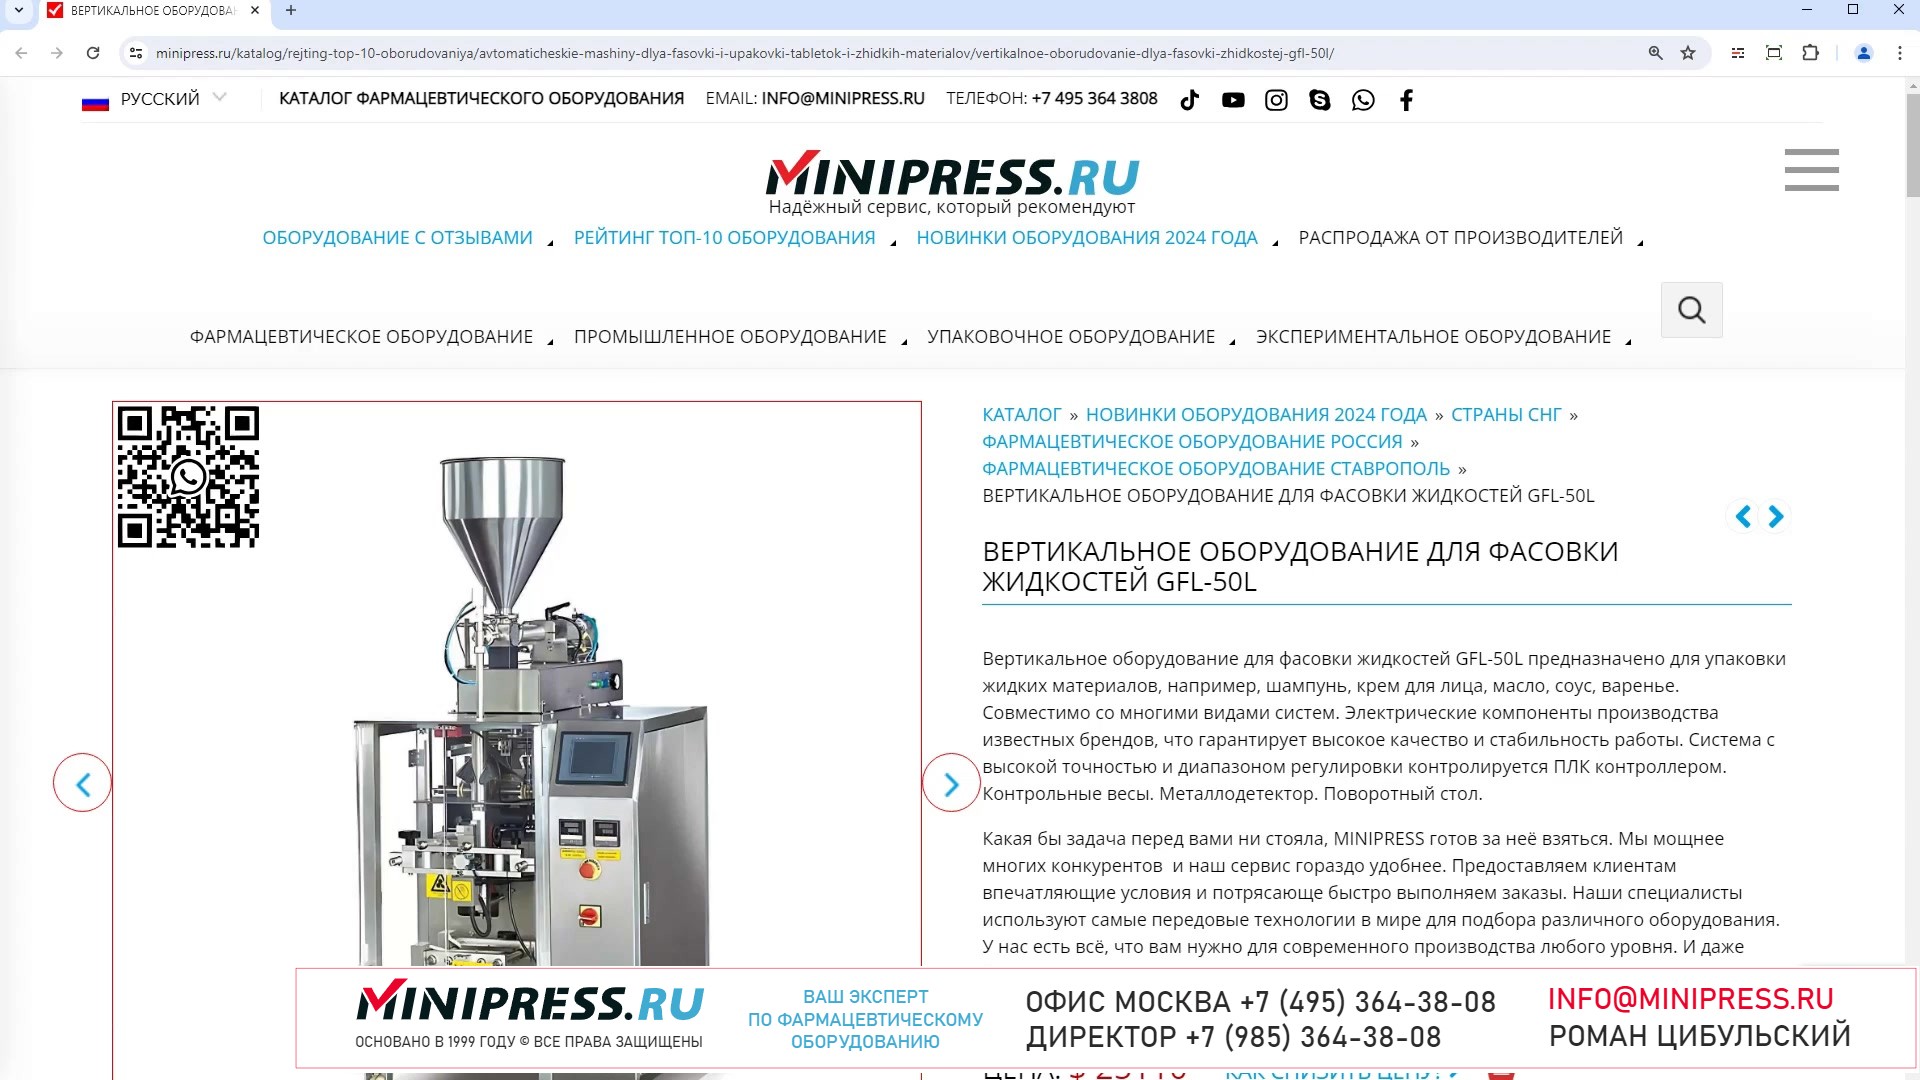 Minipress.ru Вертикальное оборудование для фасовки жидкостей GFL-50L